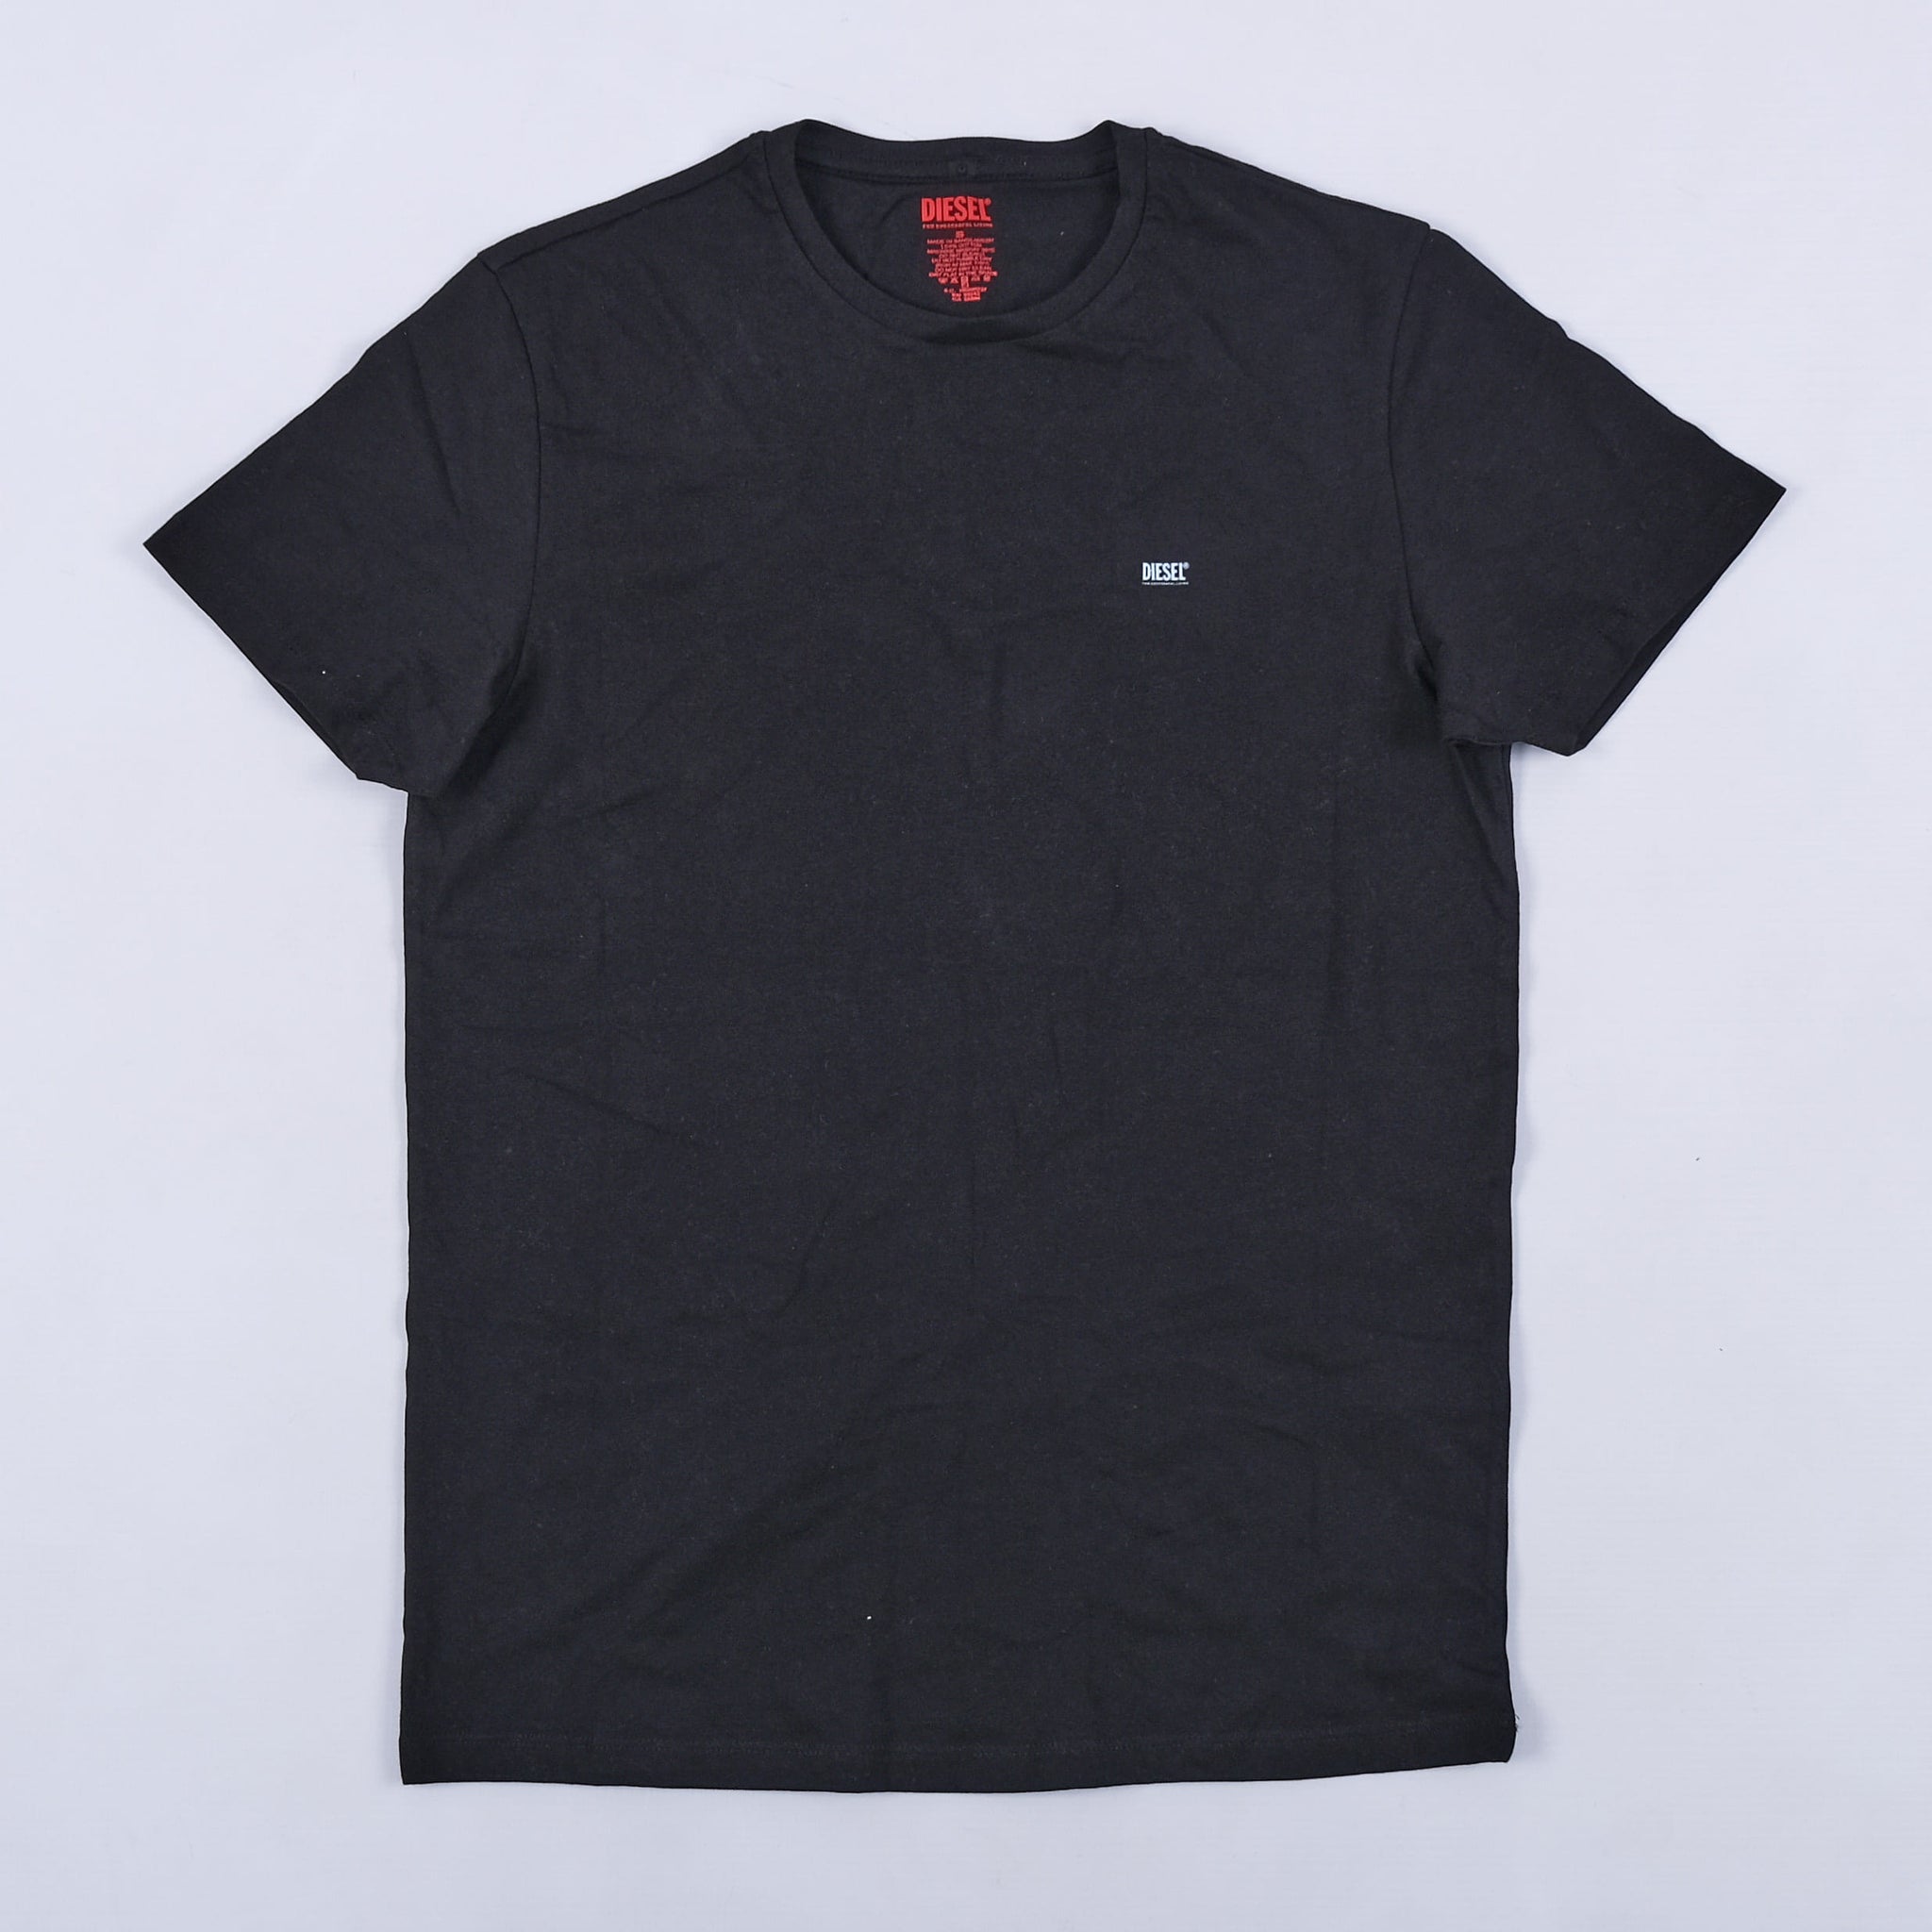 Umtee-Jake T-Shirt (Black)